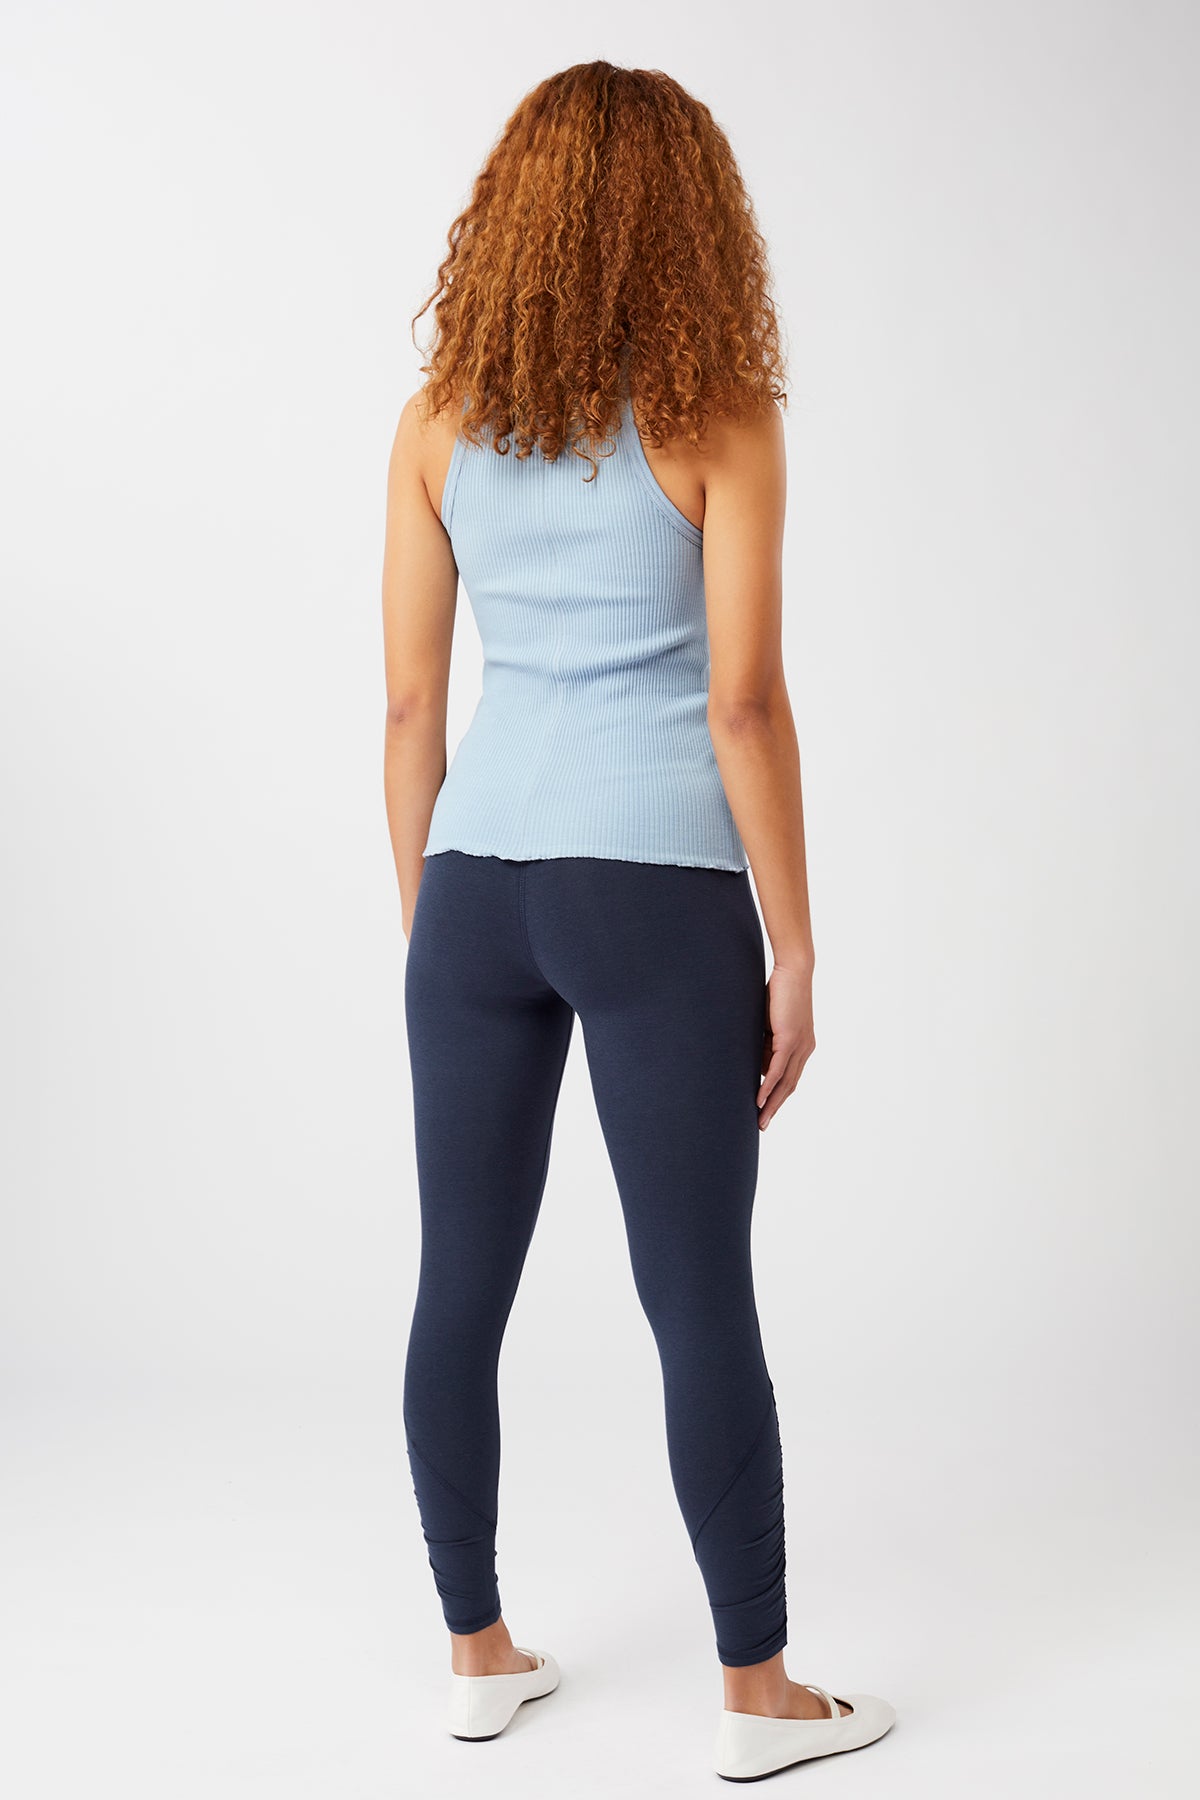 Mandala Yoga Top Blau Outfit Rückseite - Ribbed Tank Top